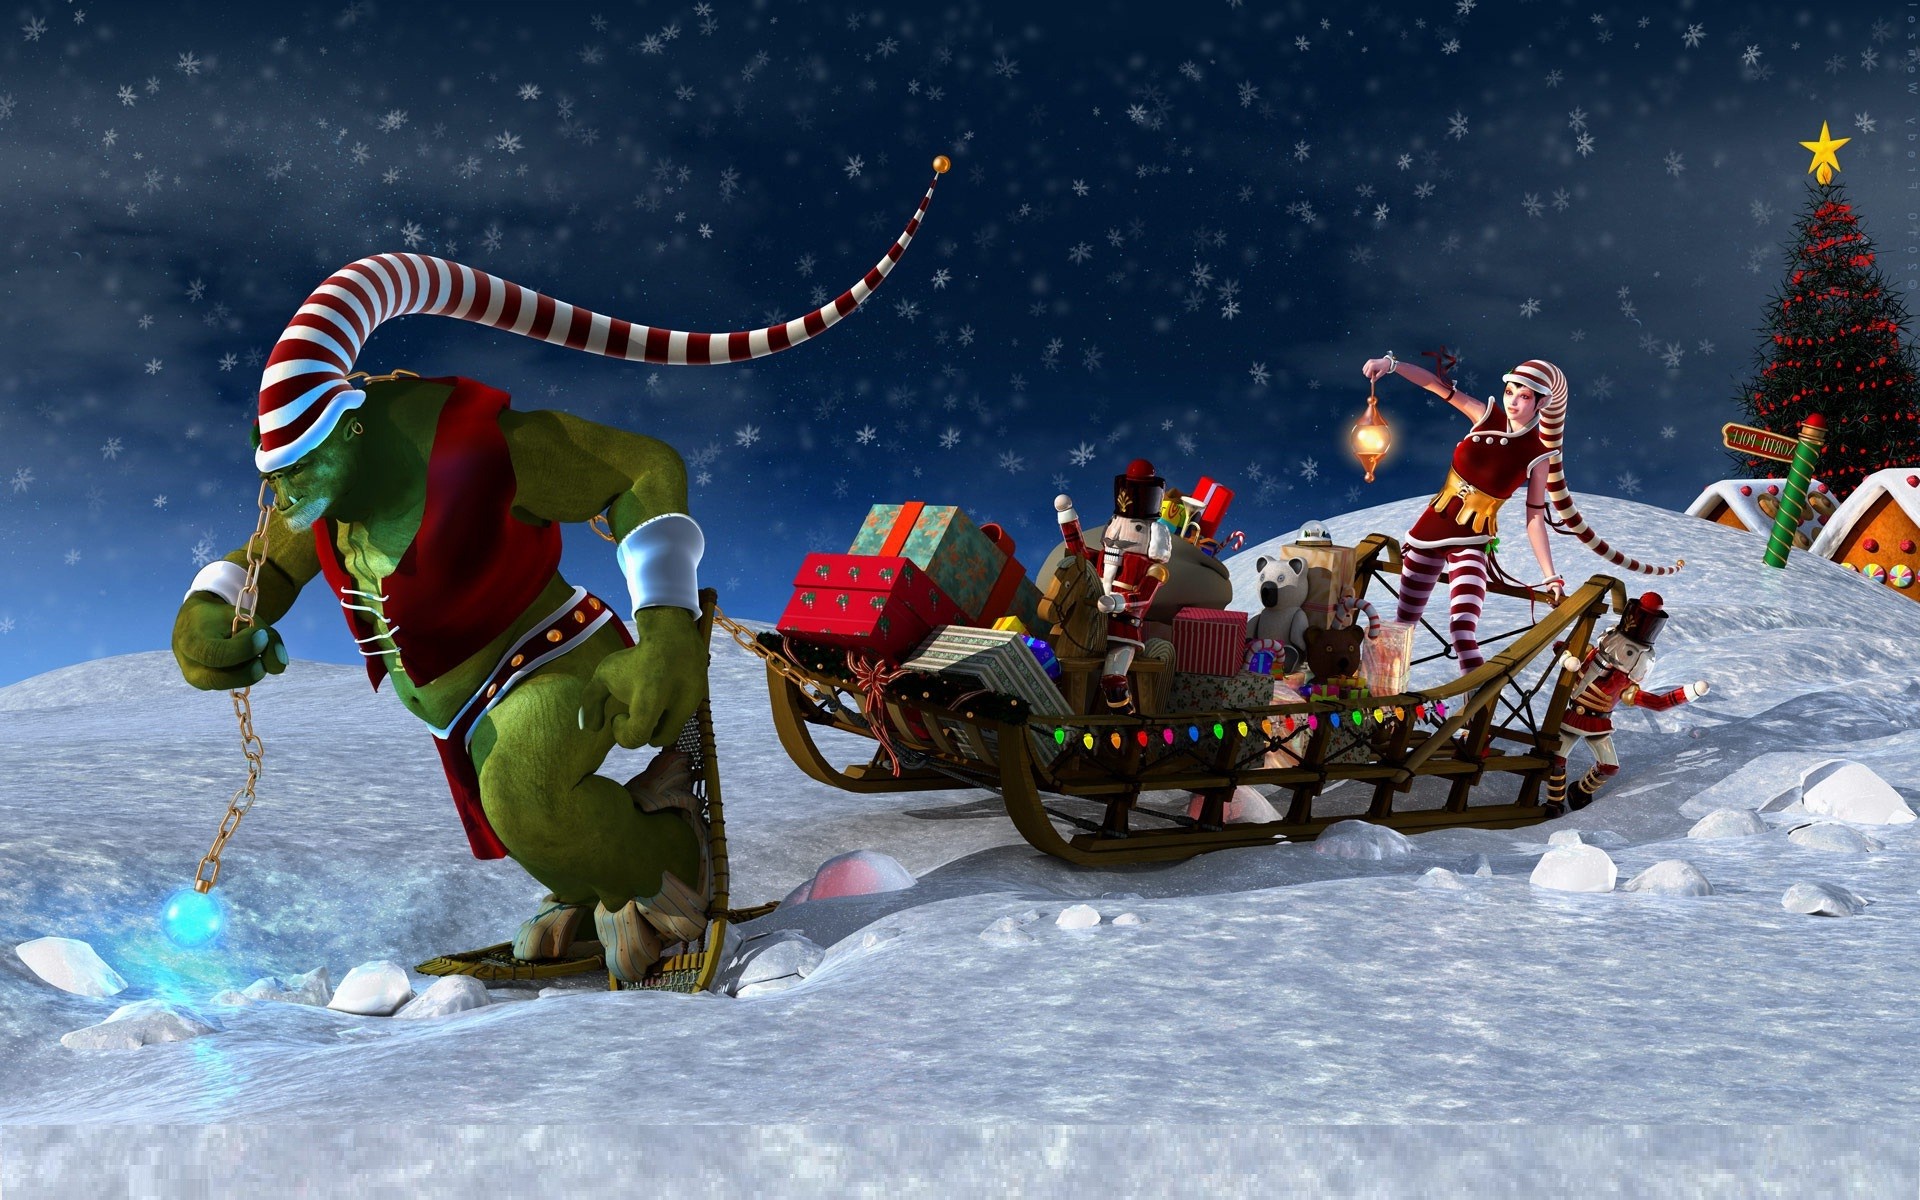 Animated Christmas Backgrounds For Desktop For Desktop 1920x1200